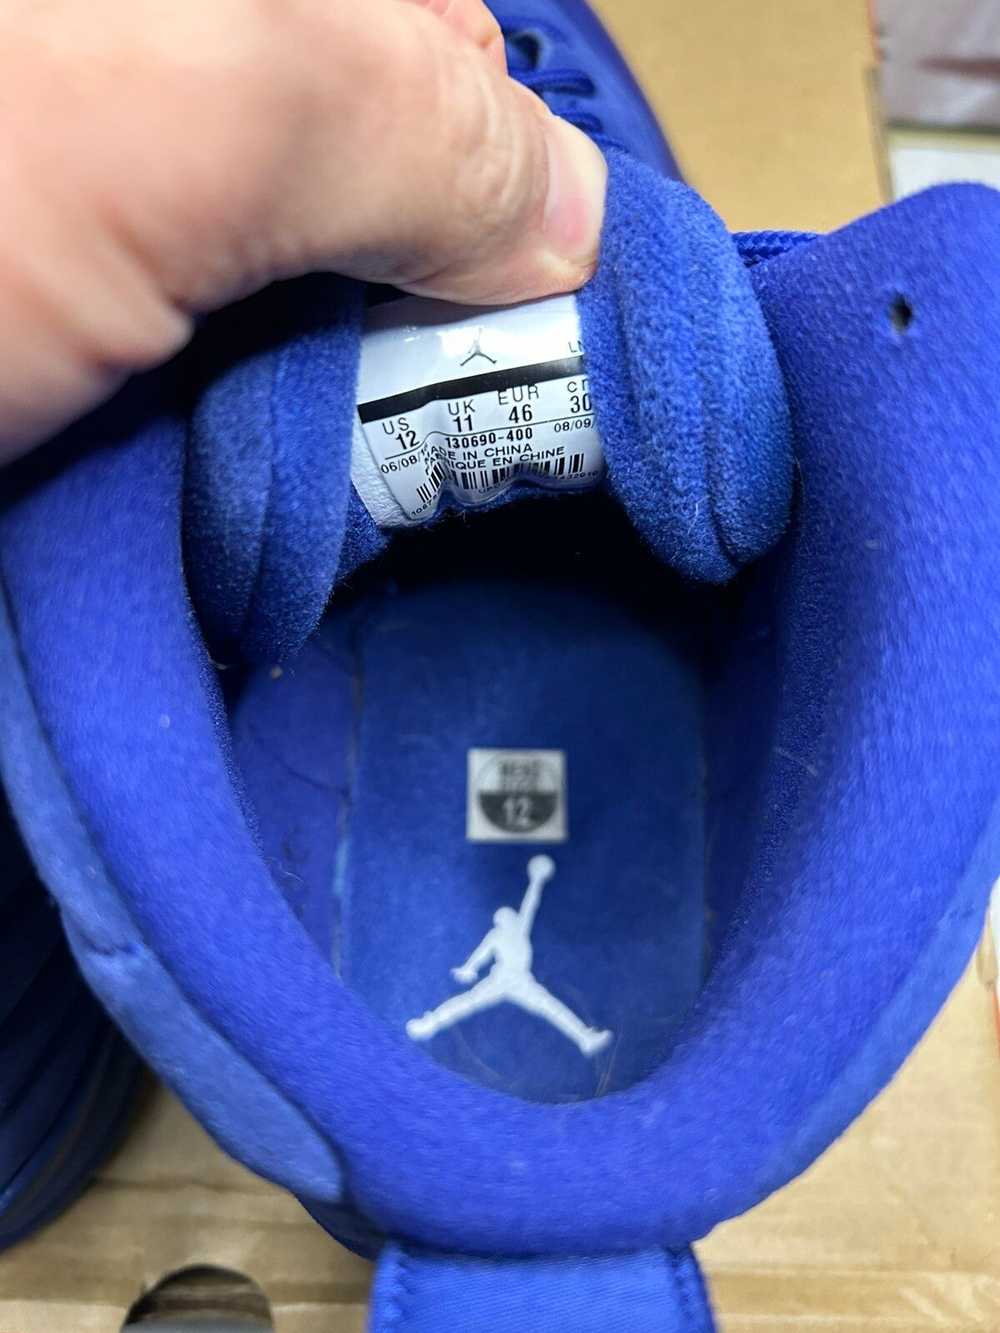 Jordan Brand Jordan Retro 12 ‘royal blue’ - image 5